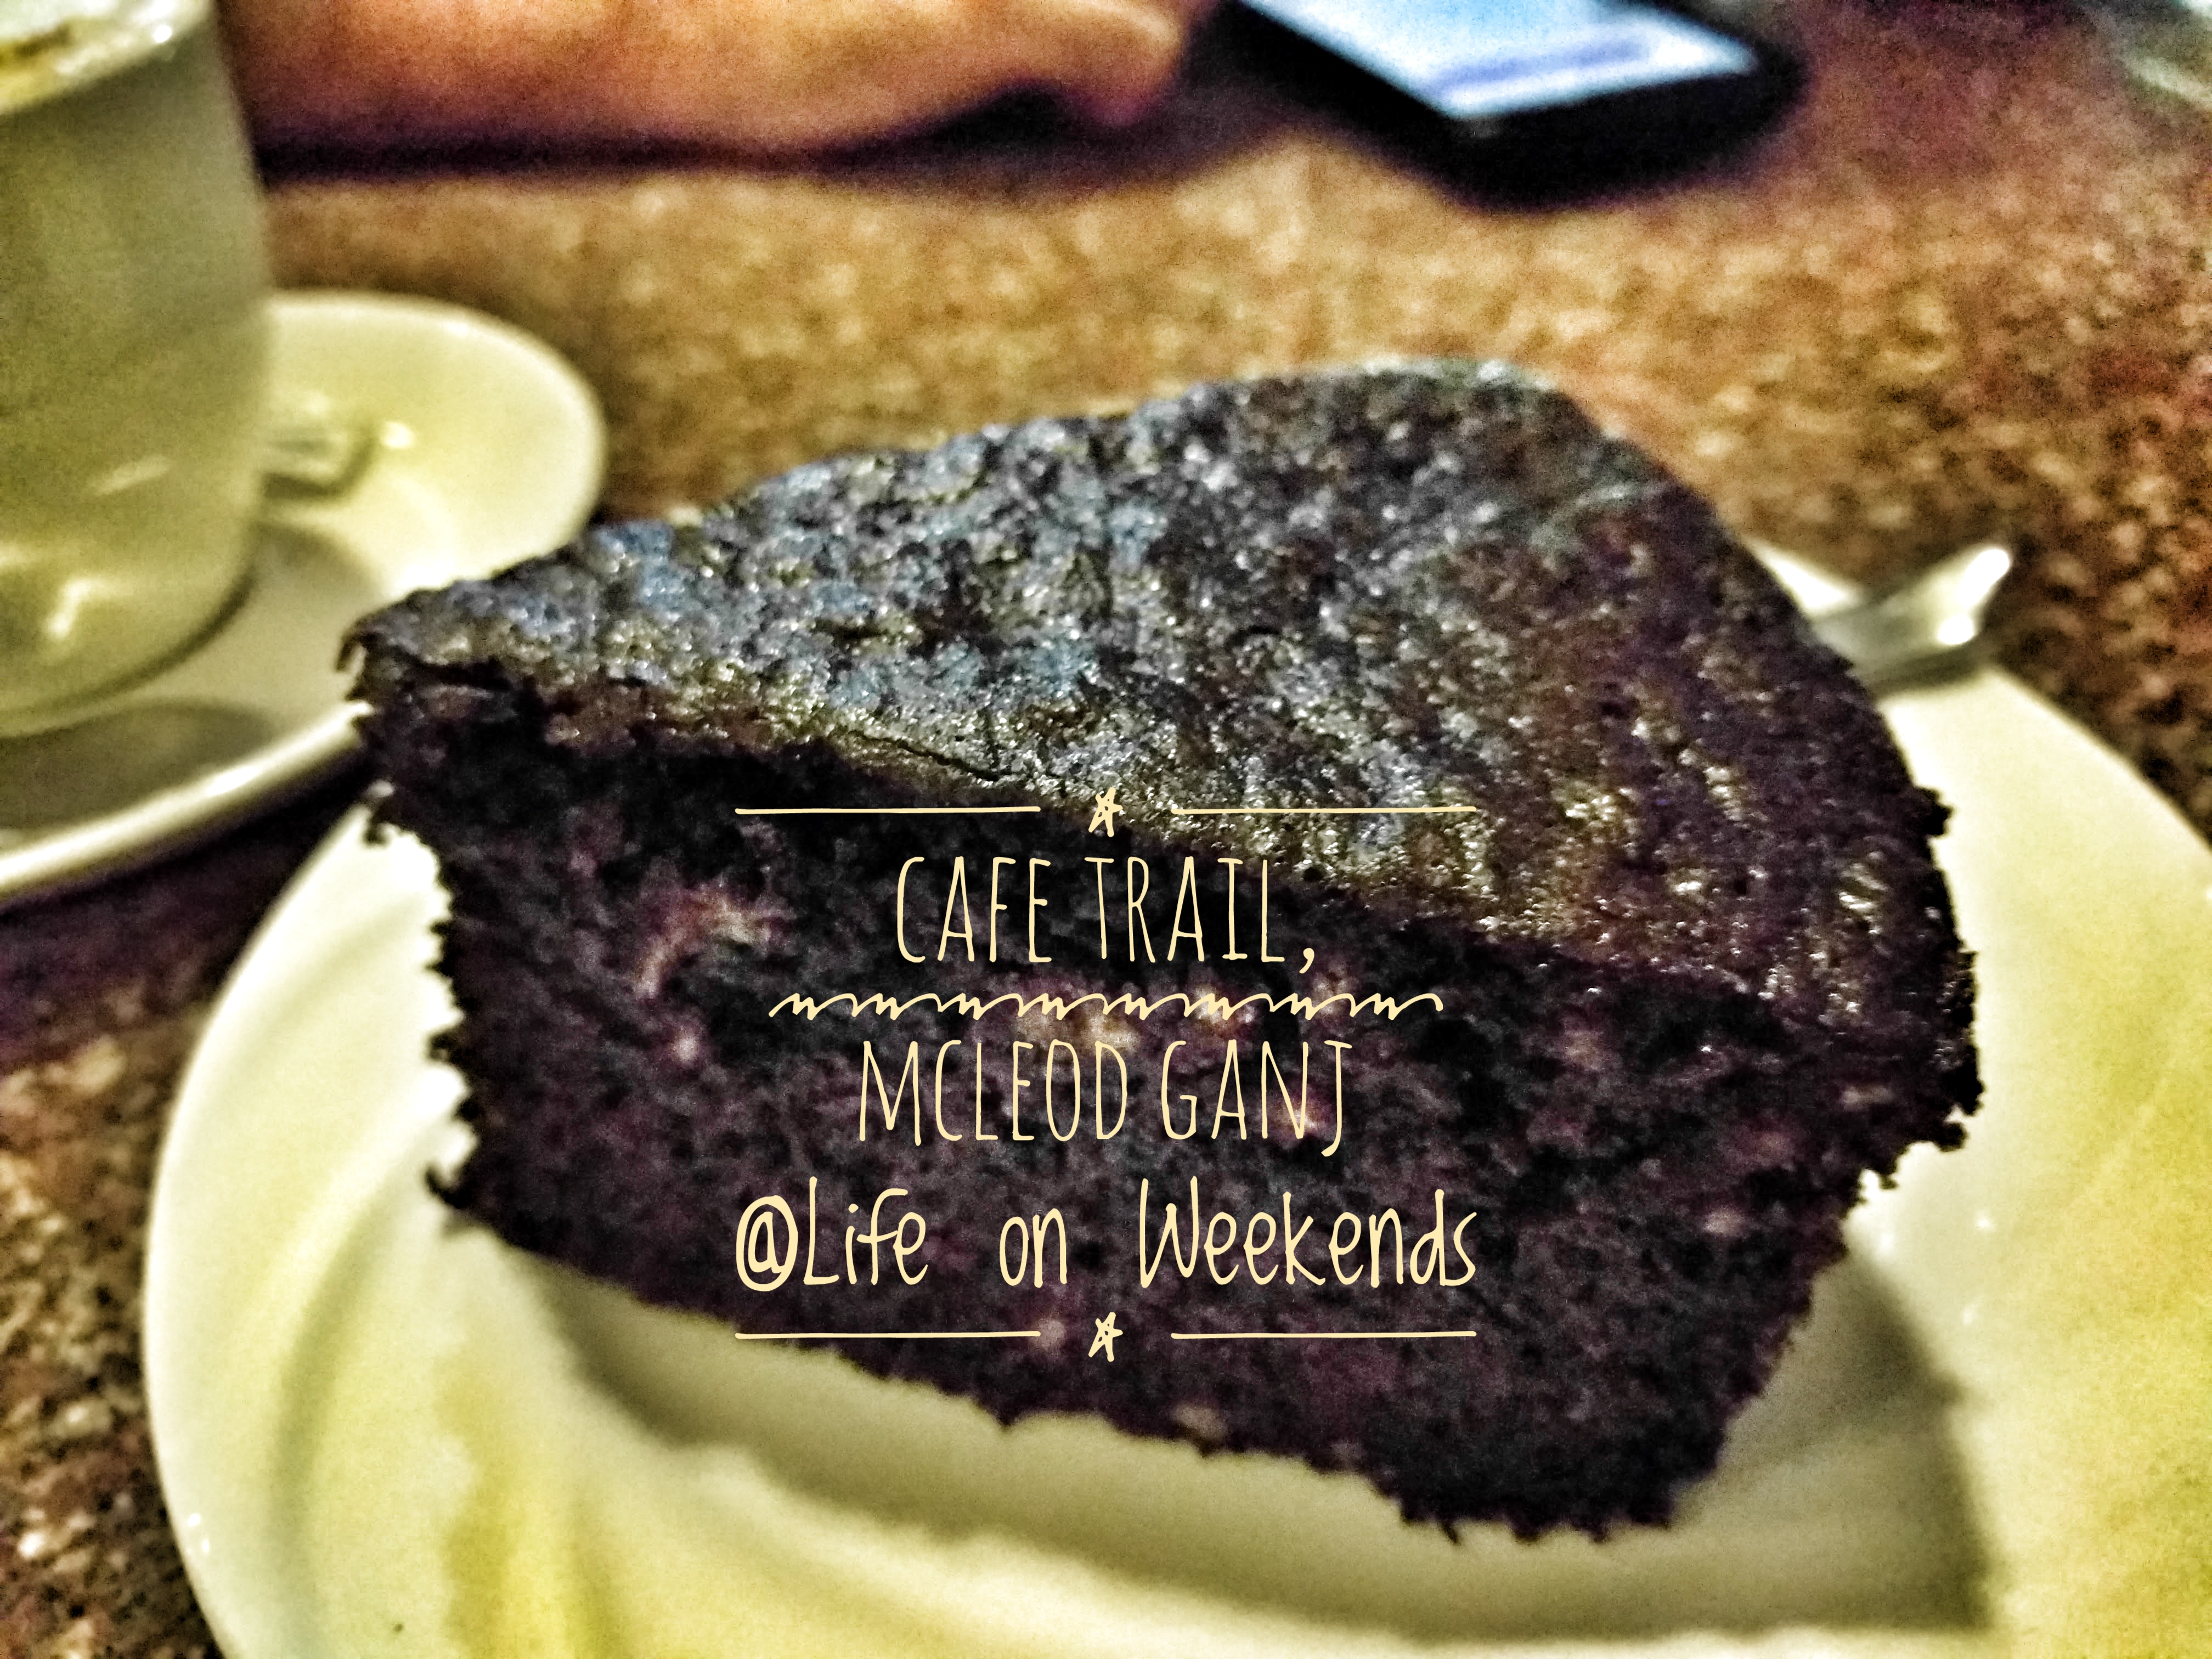 Clay Oven Cafe, McLeod Ganj @Life on Weekends